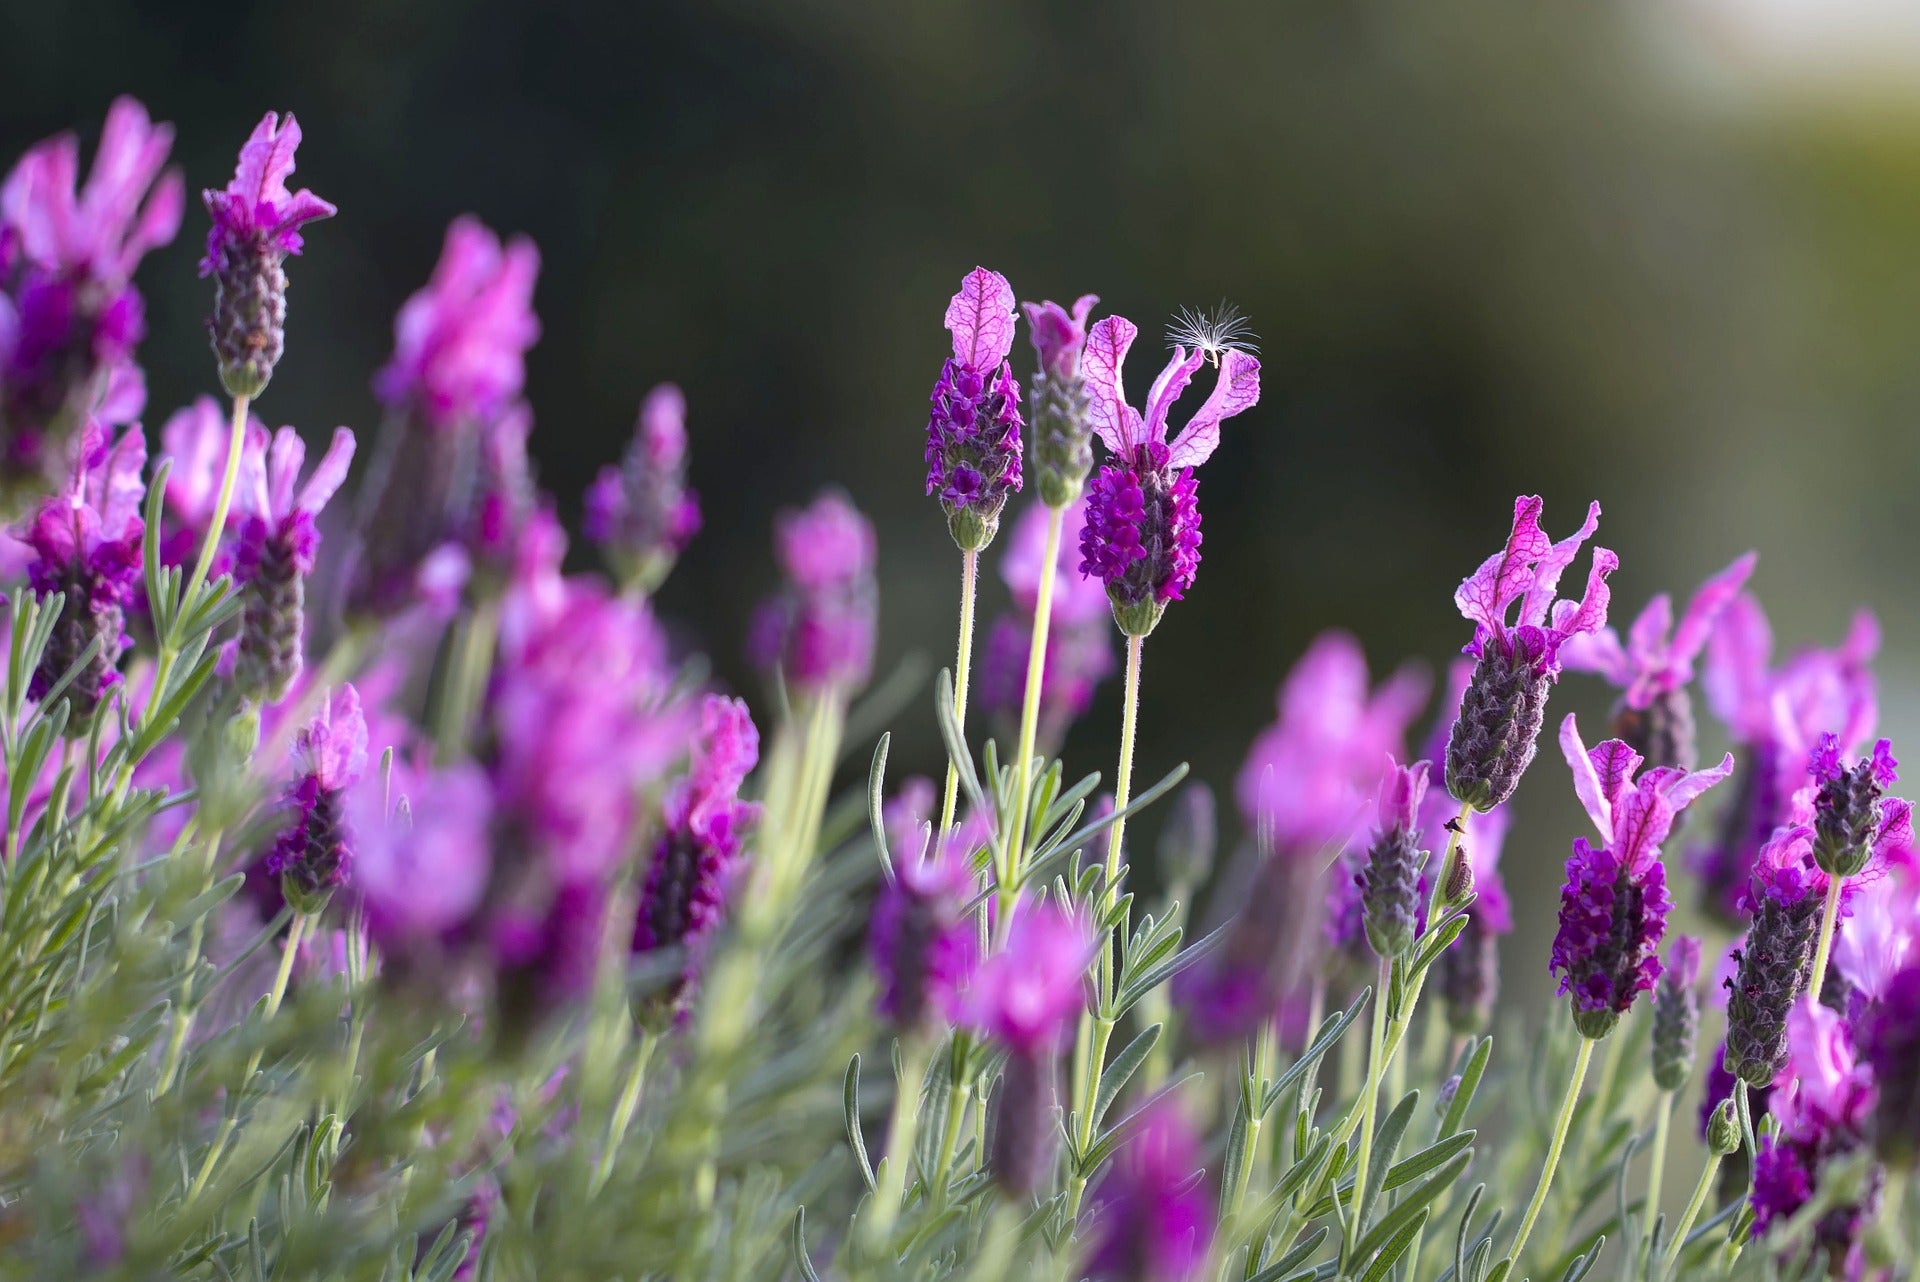 Edible lavender in a field